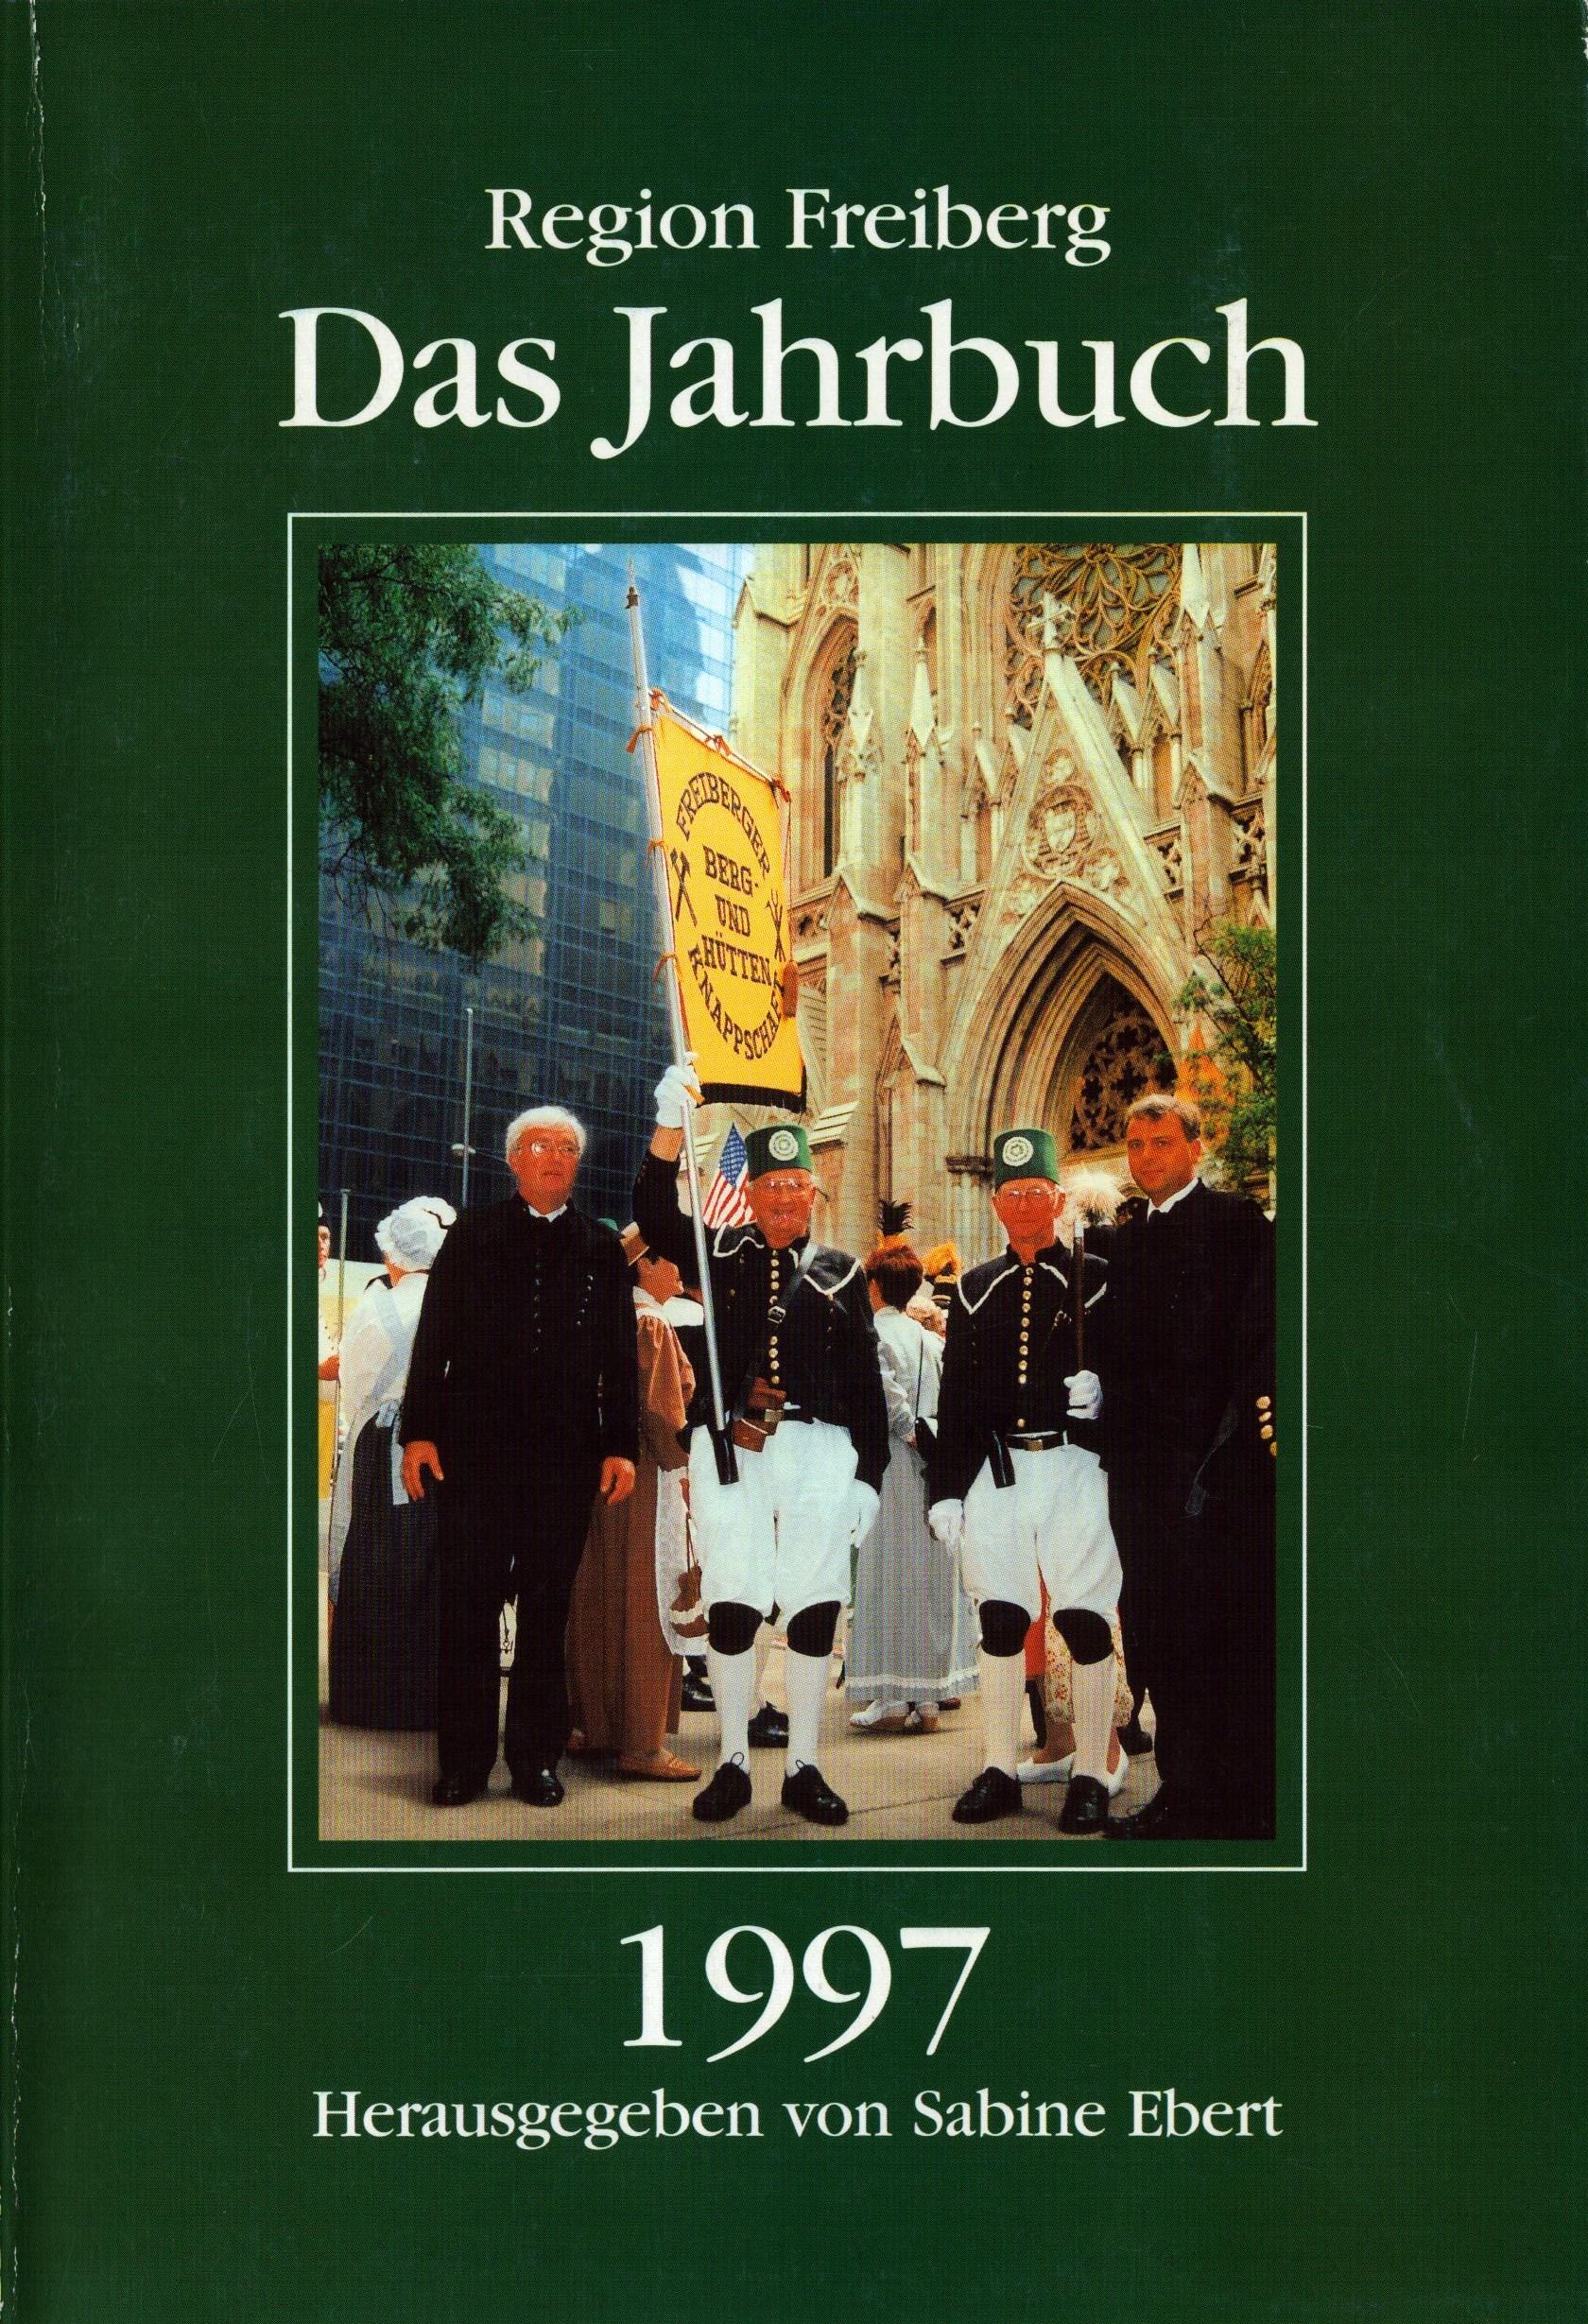 Das Jahrbuch 1997 für die Region Freiberg (Archiv SAXONIA-FREIBERG-STIFTUNG CC BY-NC-SA)